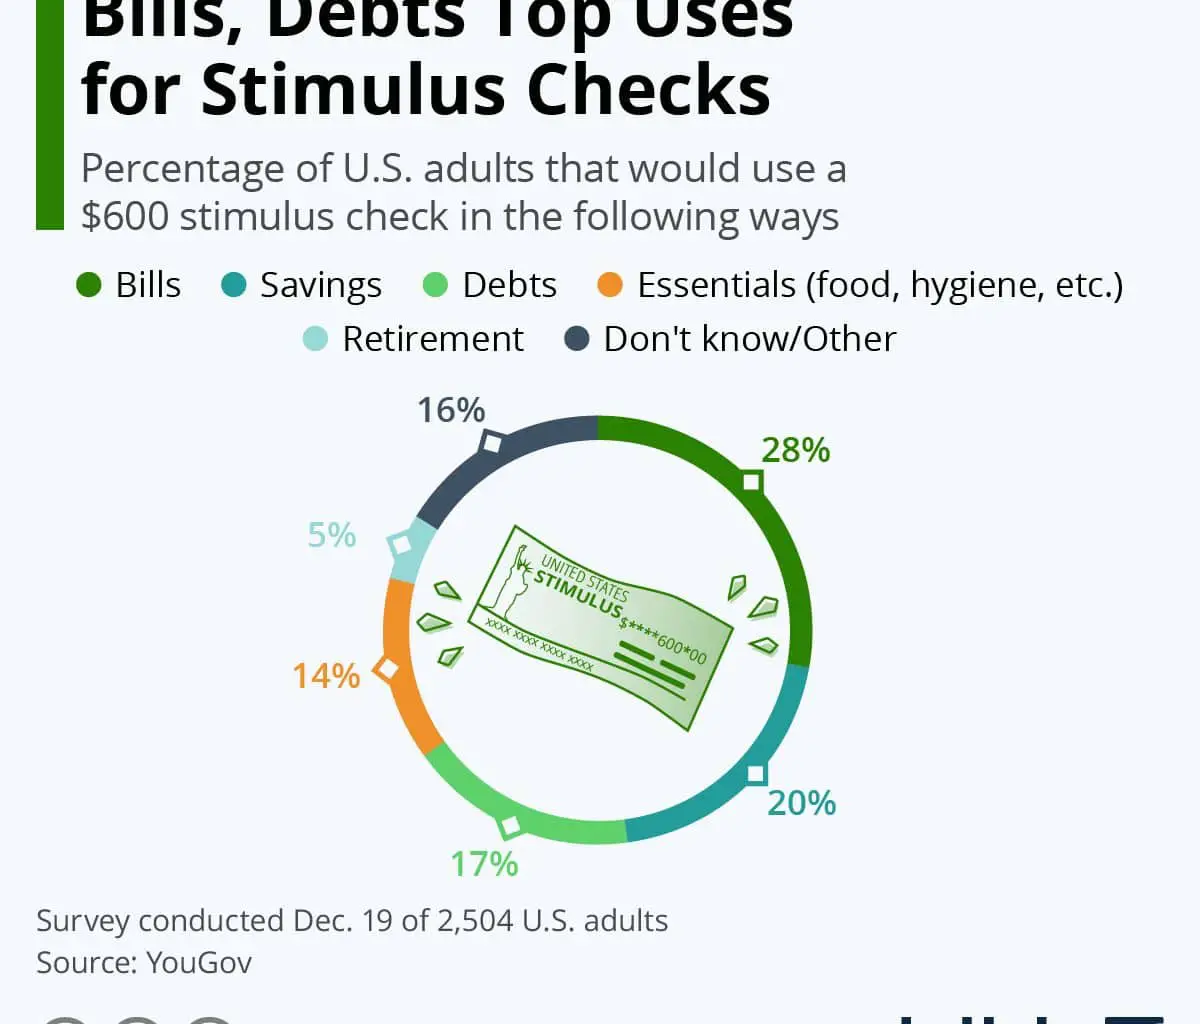 Bills, Debts Top Uses For Stimulus Checks